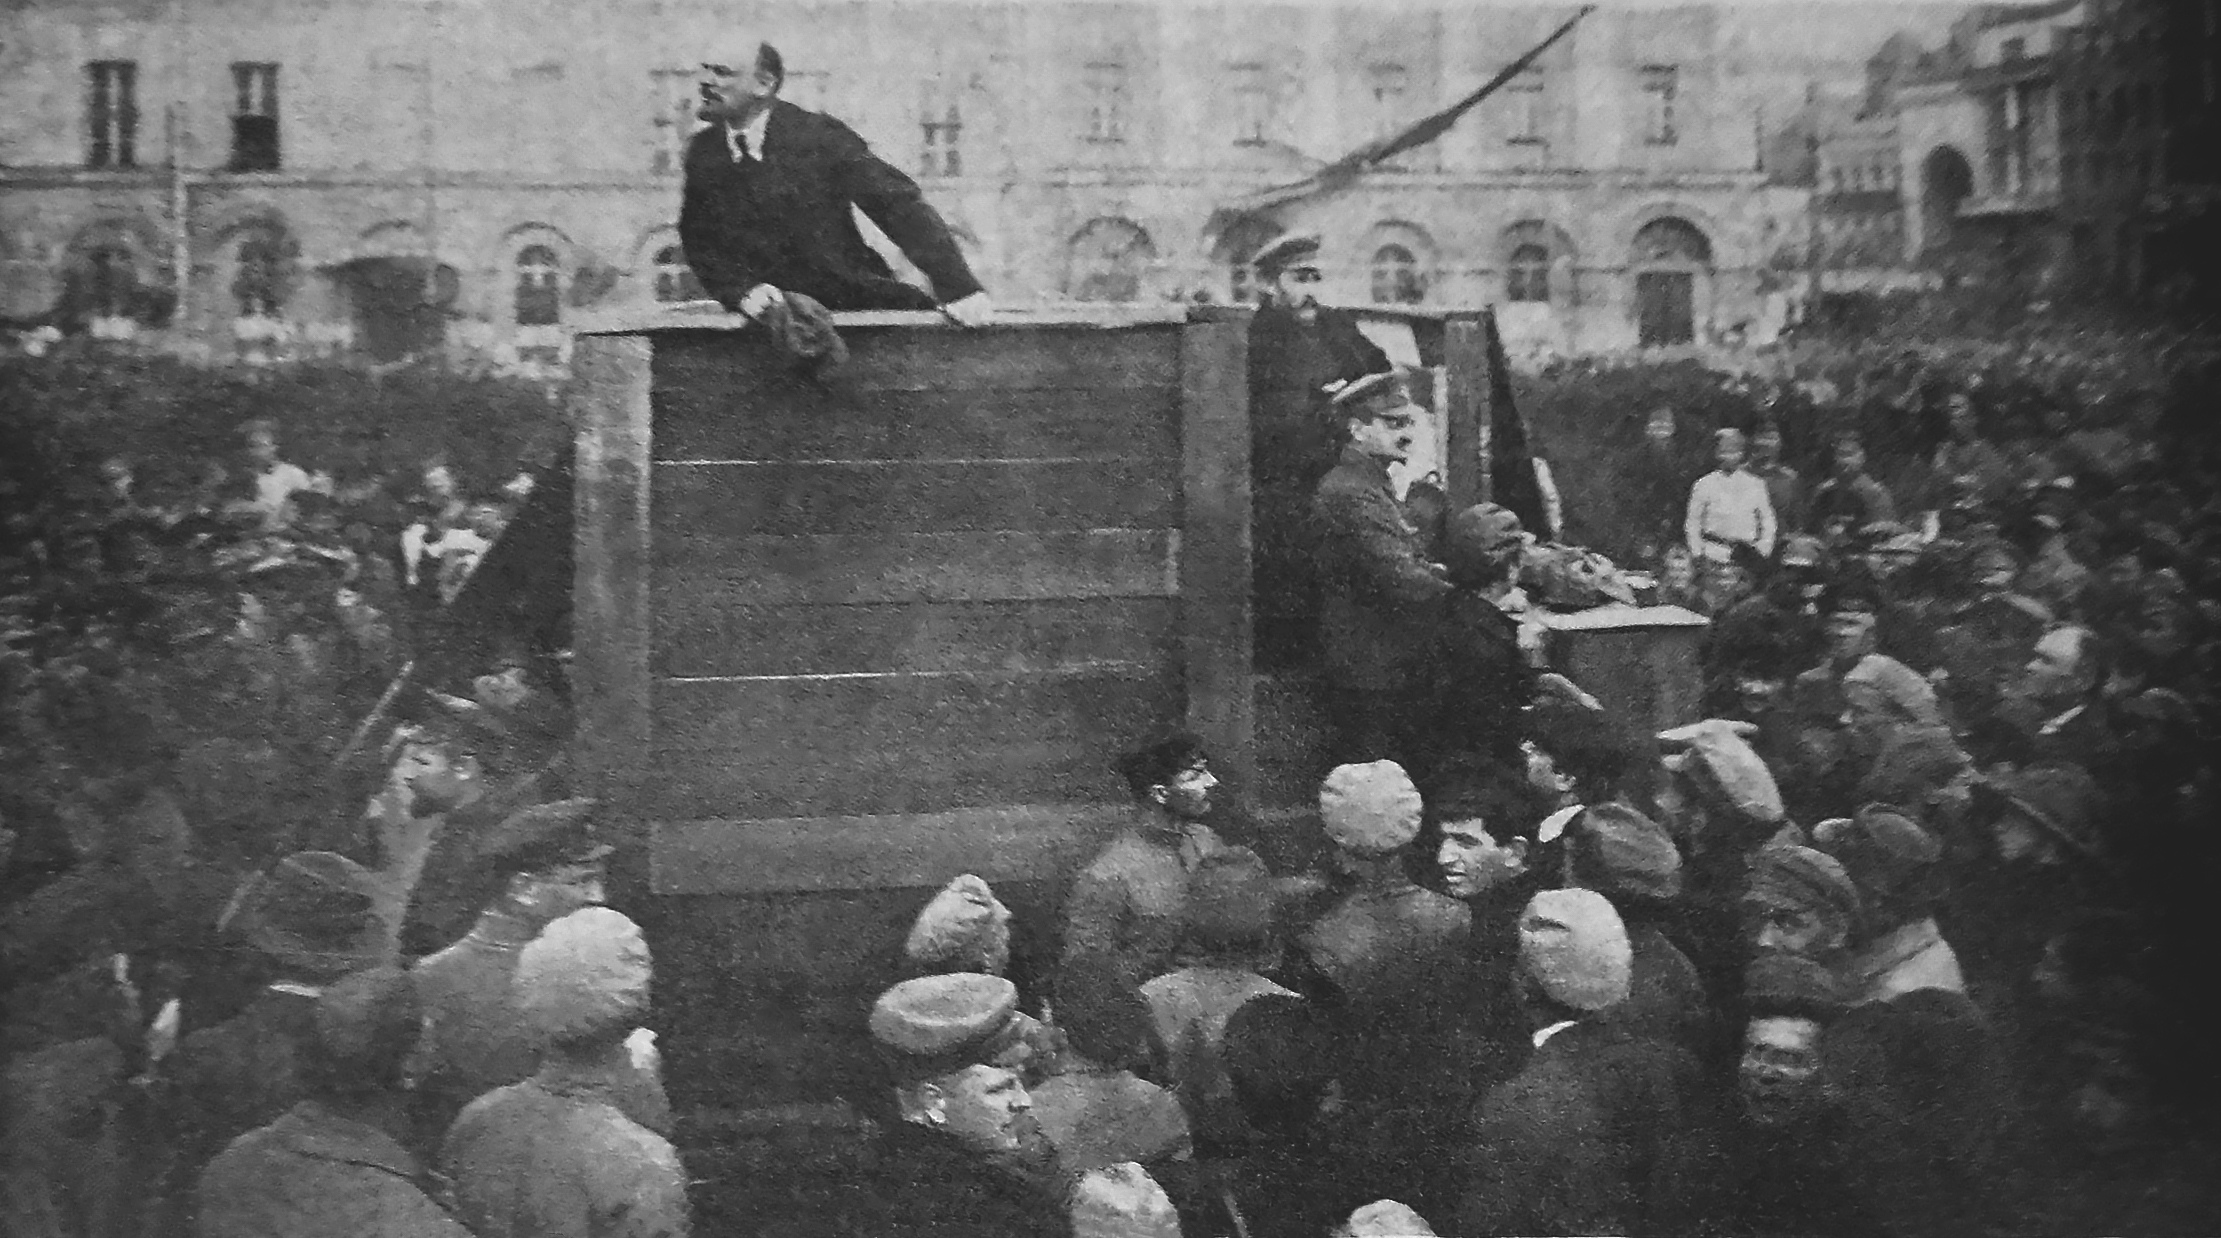 Vladimir Lenin Leon Trotsky Lev Kamenev 1920 Image public domain